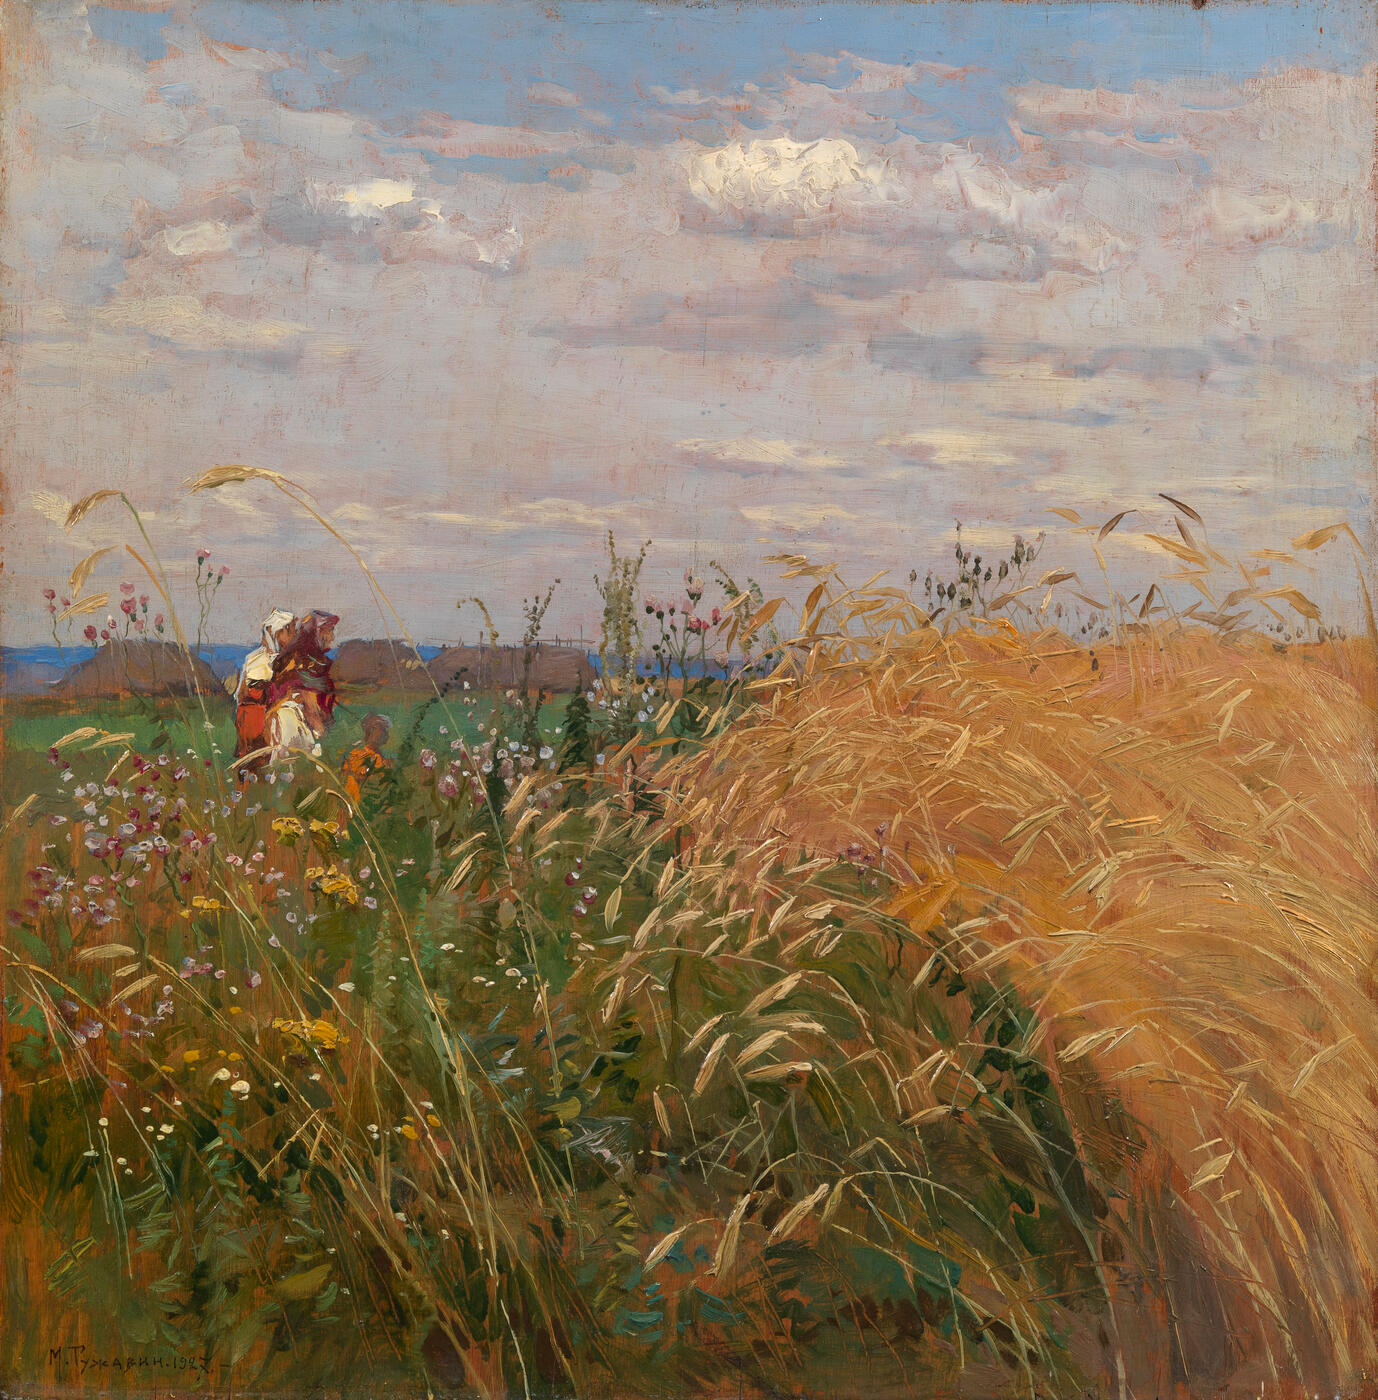 Peasant Women in a Field